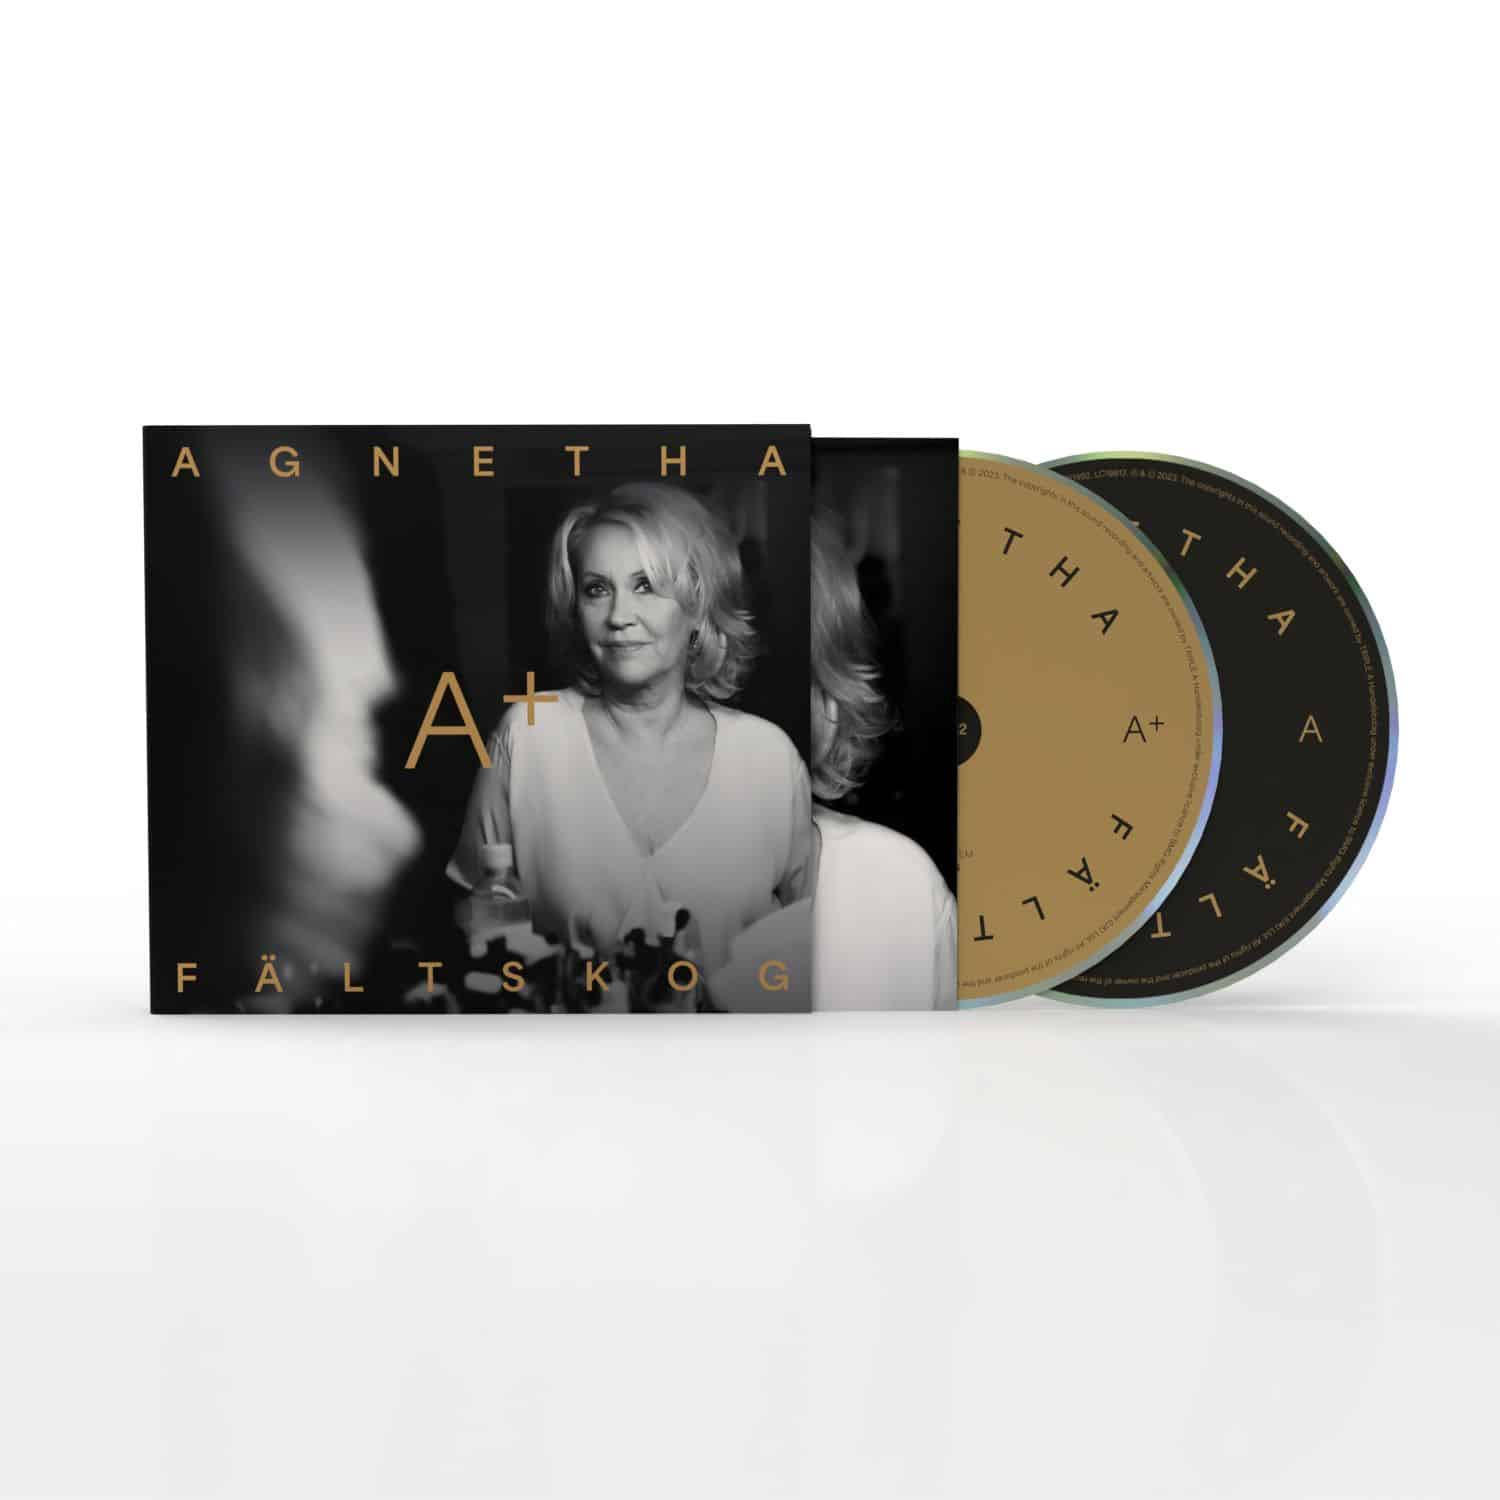 Agnetha-A-Deluxe-CD-exploded.jpg